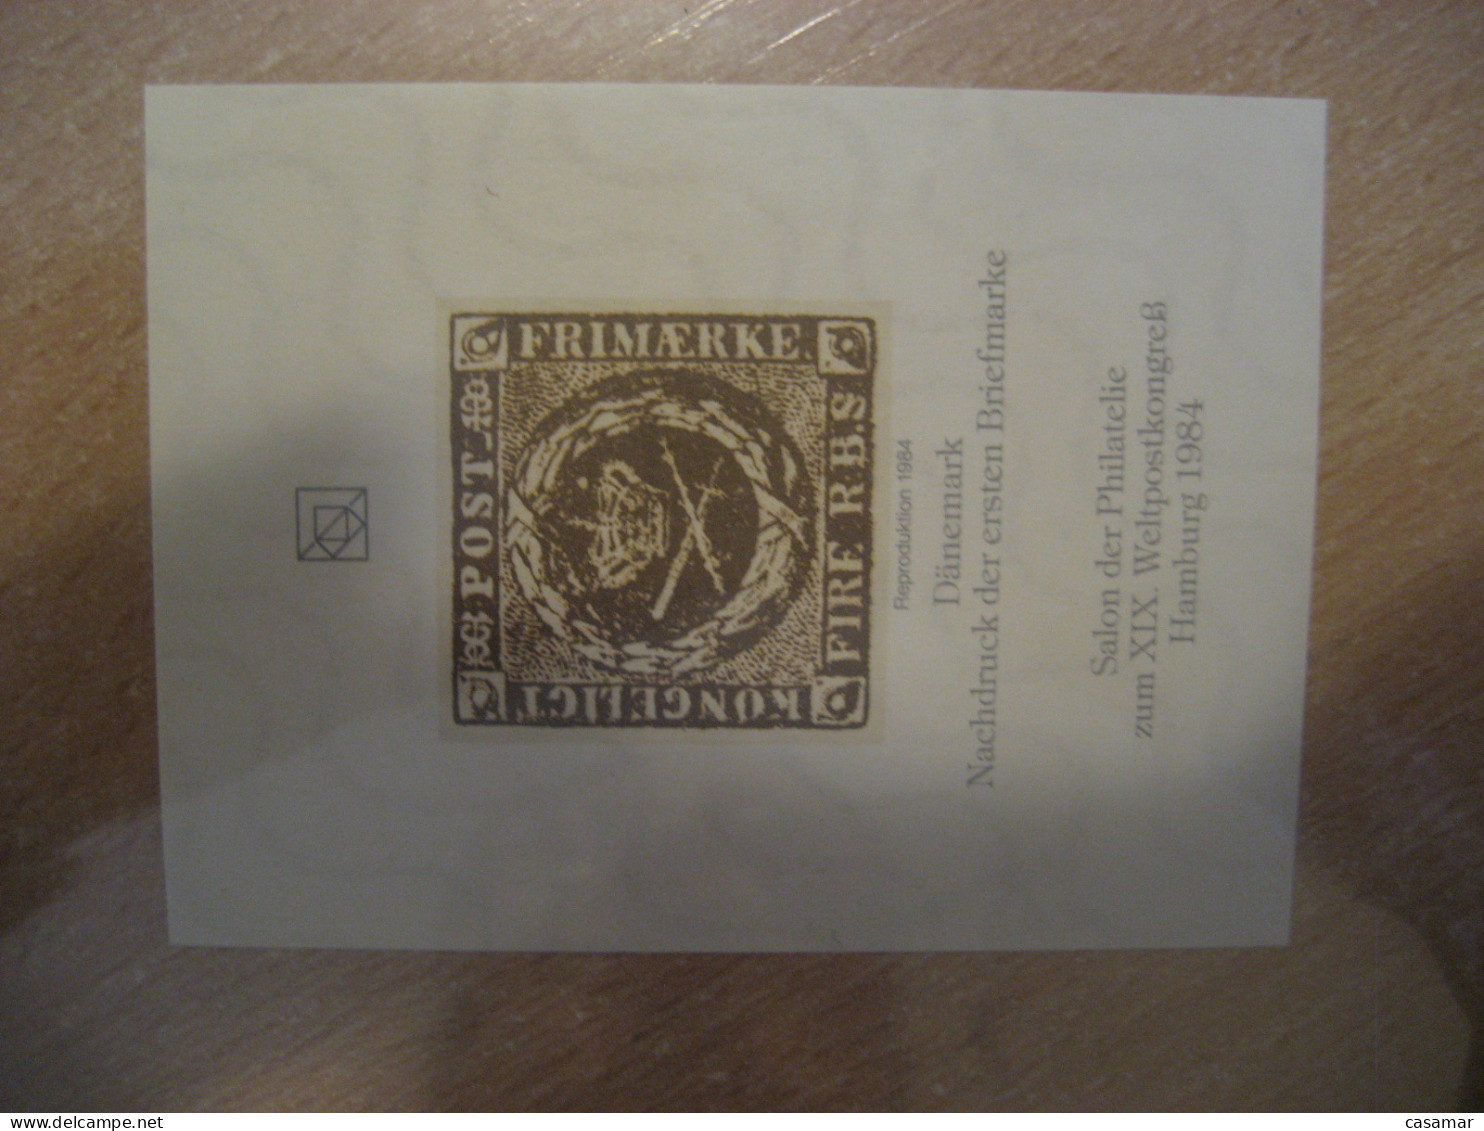 HAMBURG 1984 DENMARK Imperforated Reproduktion Proof Epreuve Nachdruck Poster Stamp Vignette GERMANY Label - Prove E Ristampe